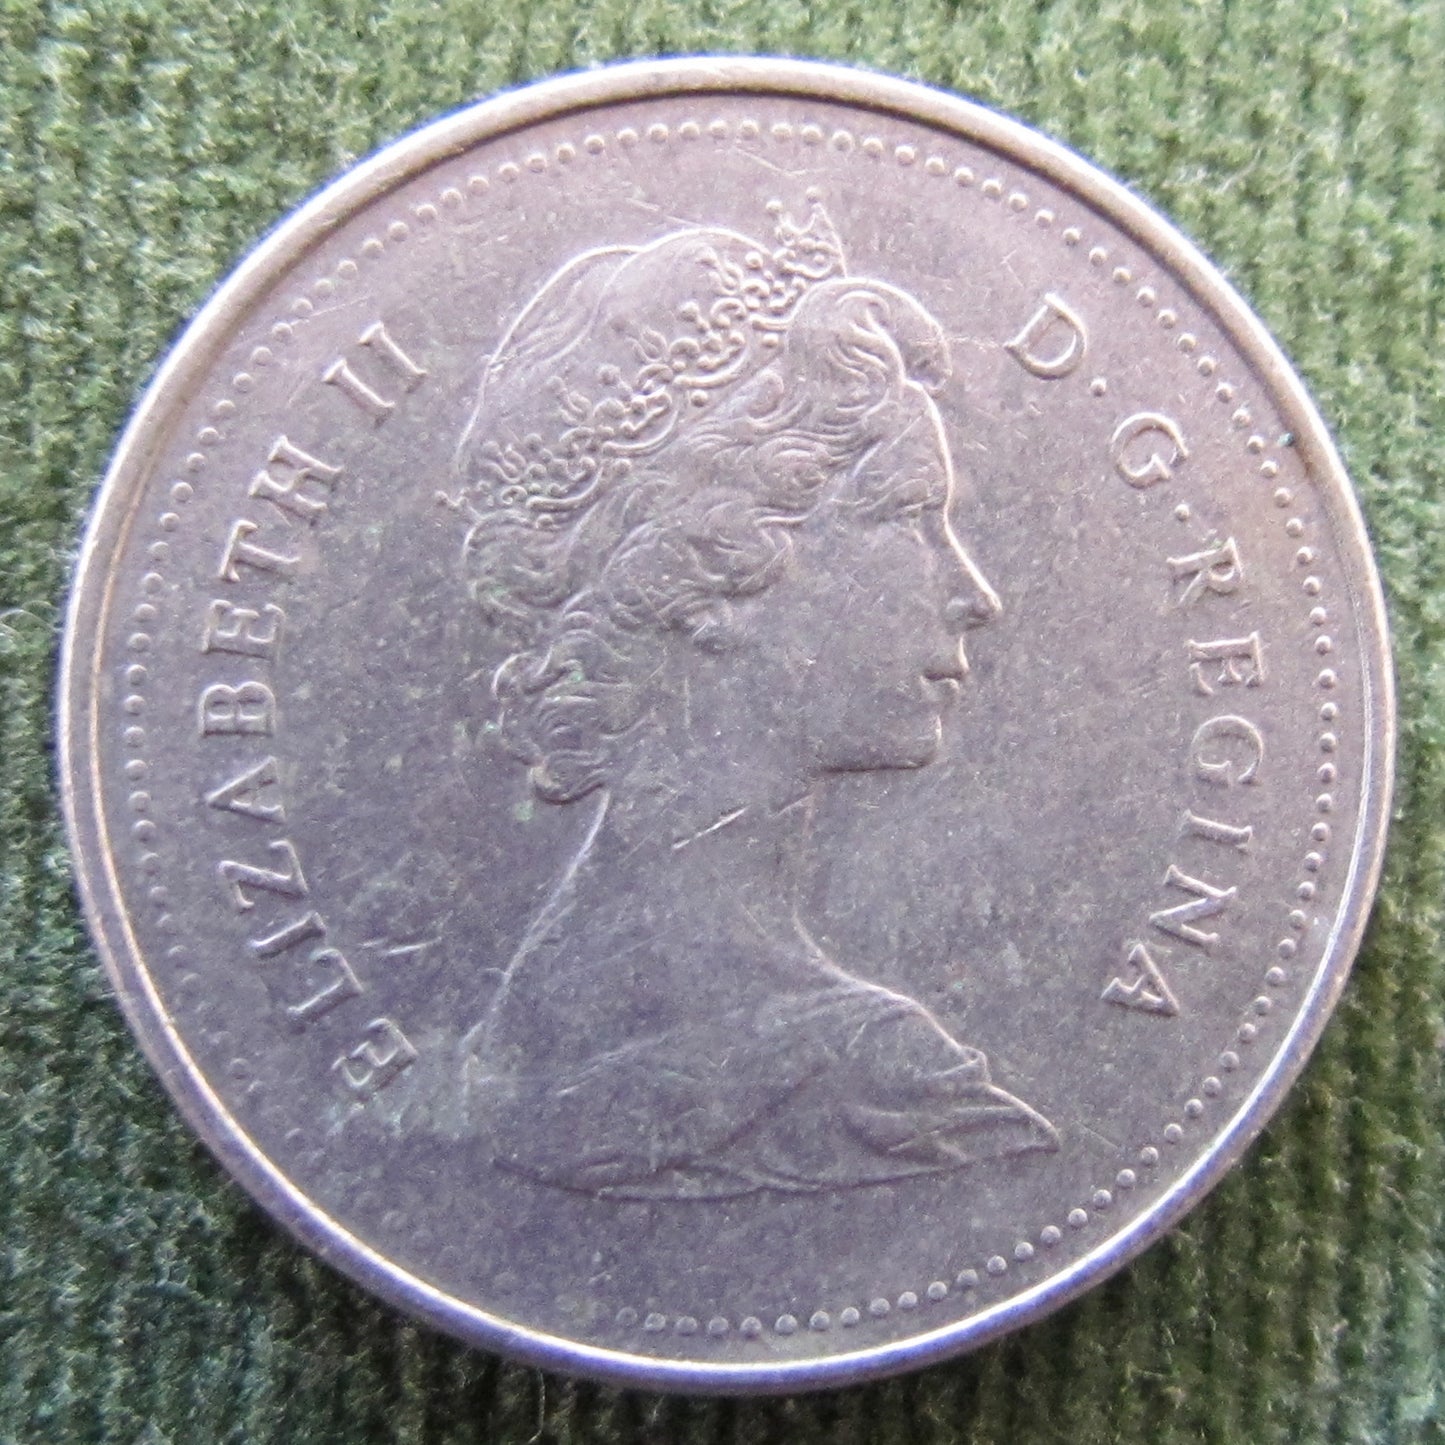 Canada 1984 5 Cent Queen Elizabeth II Coin - Circulated